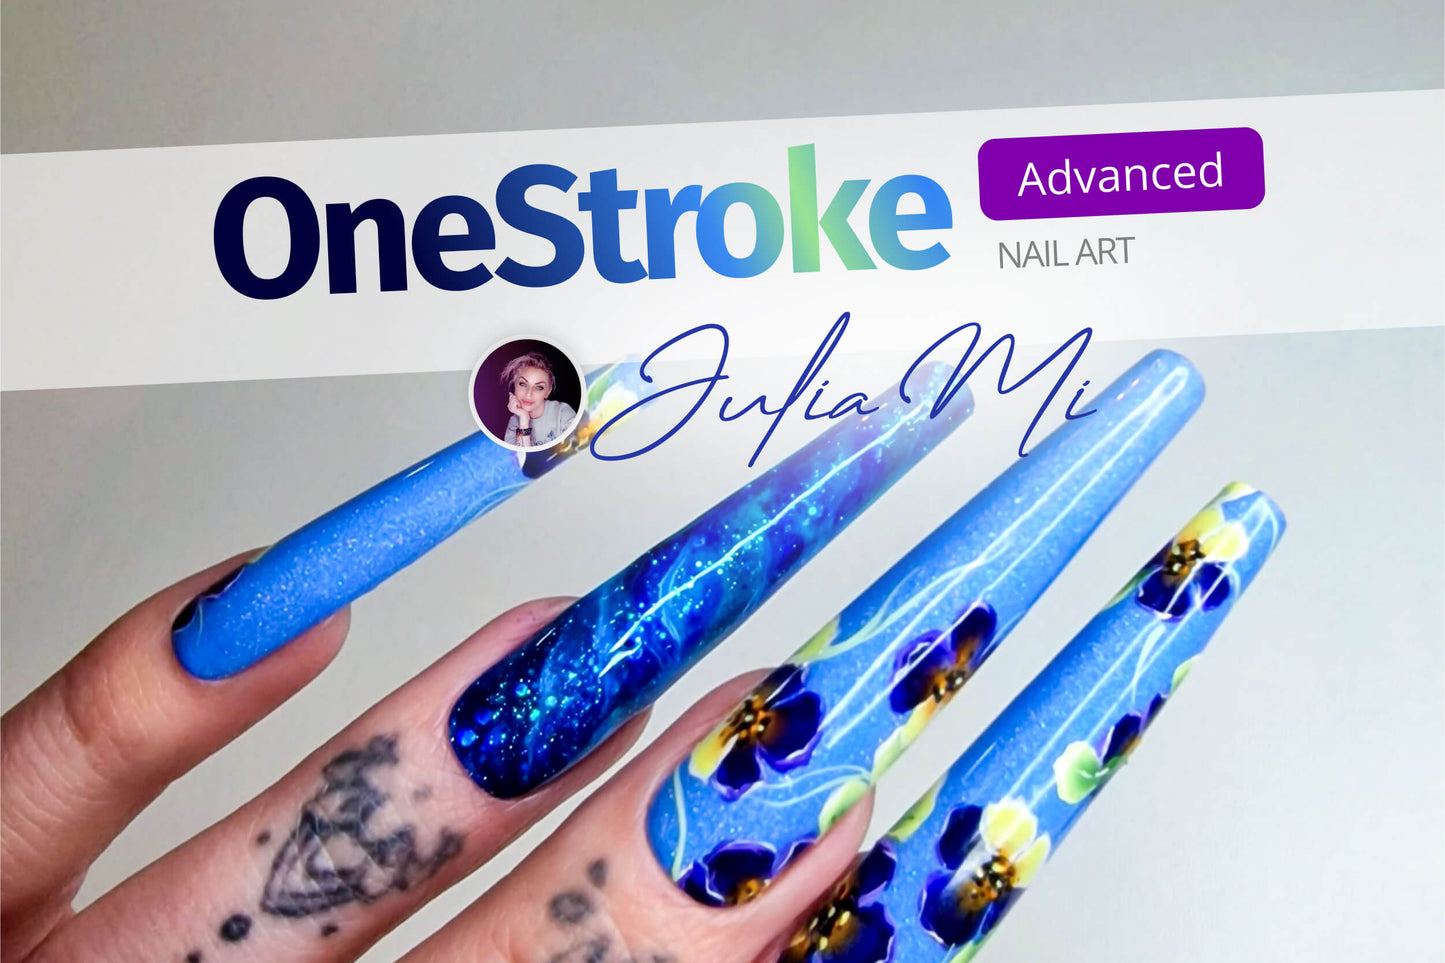 One Stroke Advanced Nail Art Masterclass